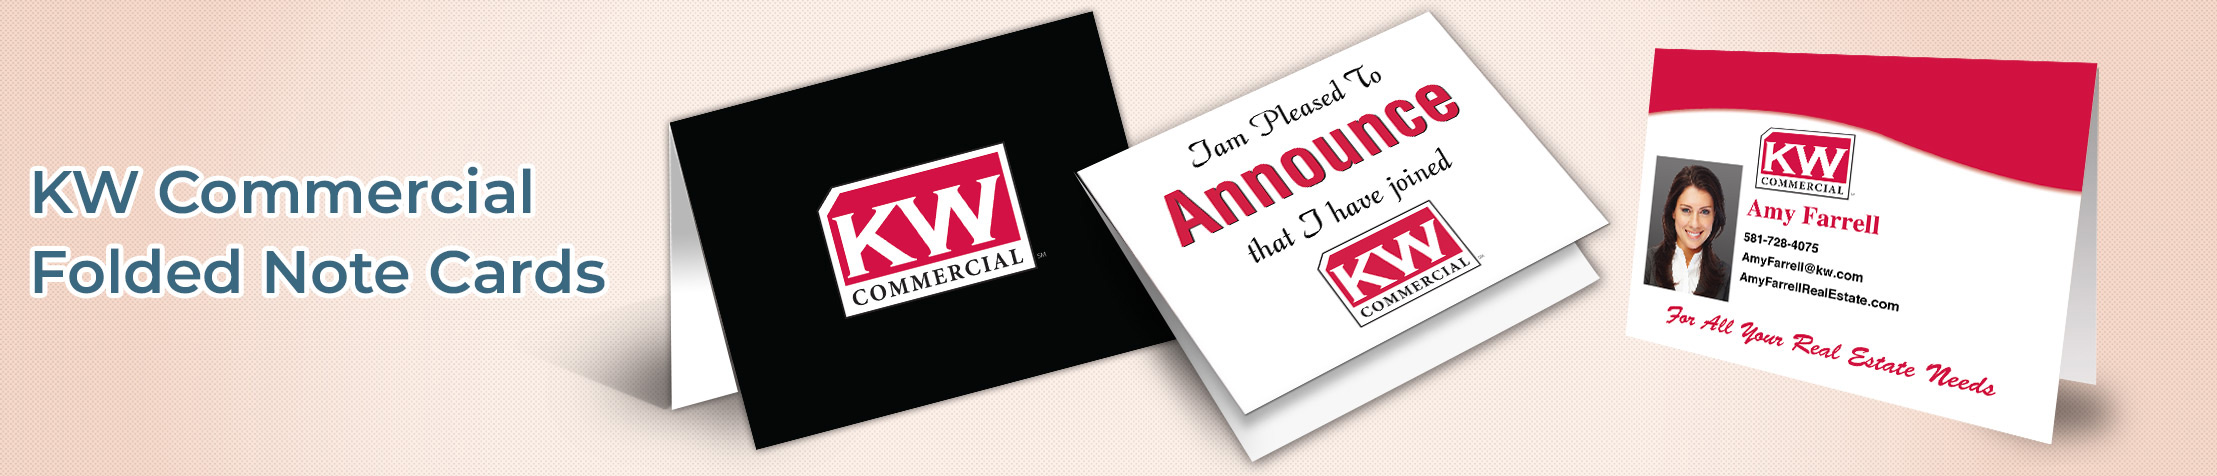 Keller Williams Real Estate KW Commercial Folded Note Cards - KW approved vendor note card stationery | BestPrintBuy.com